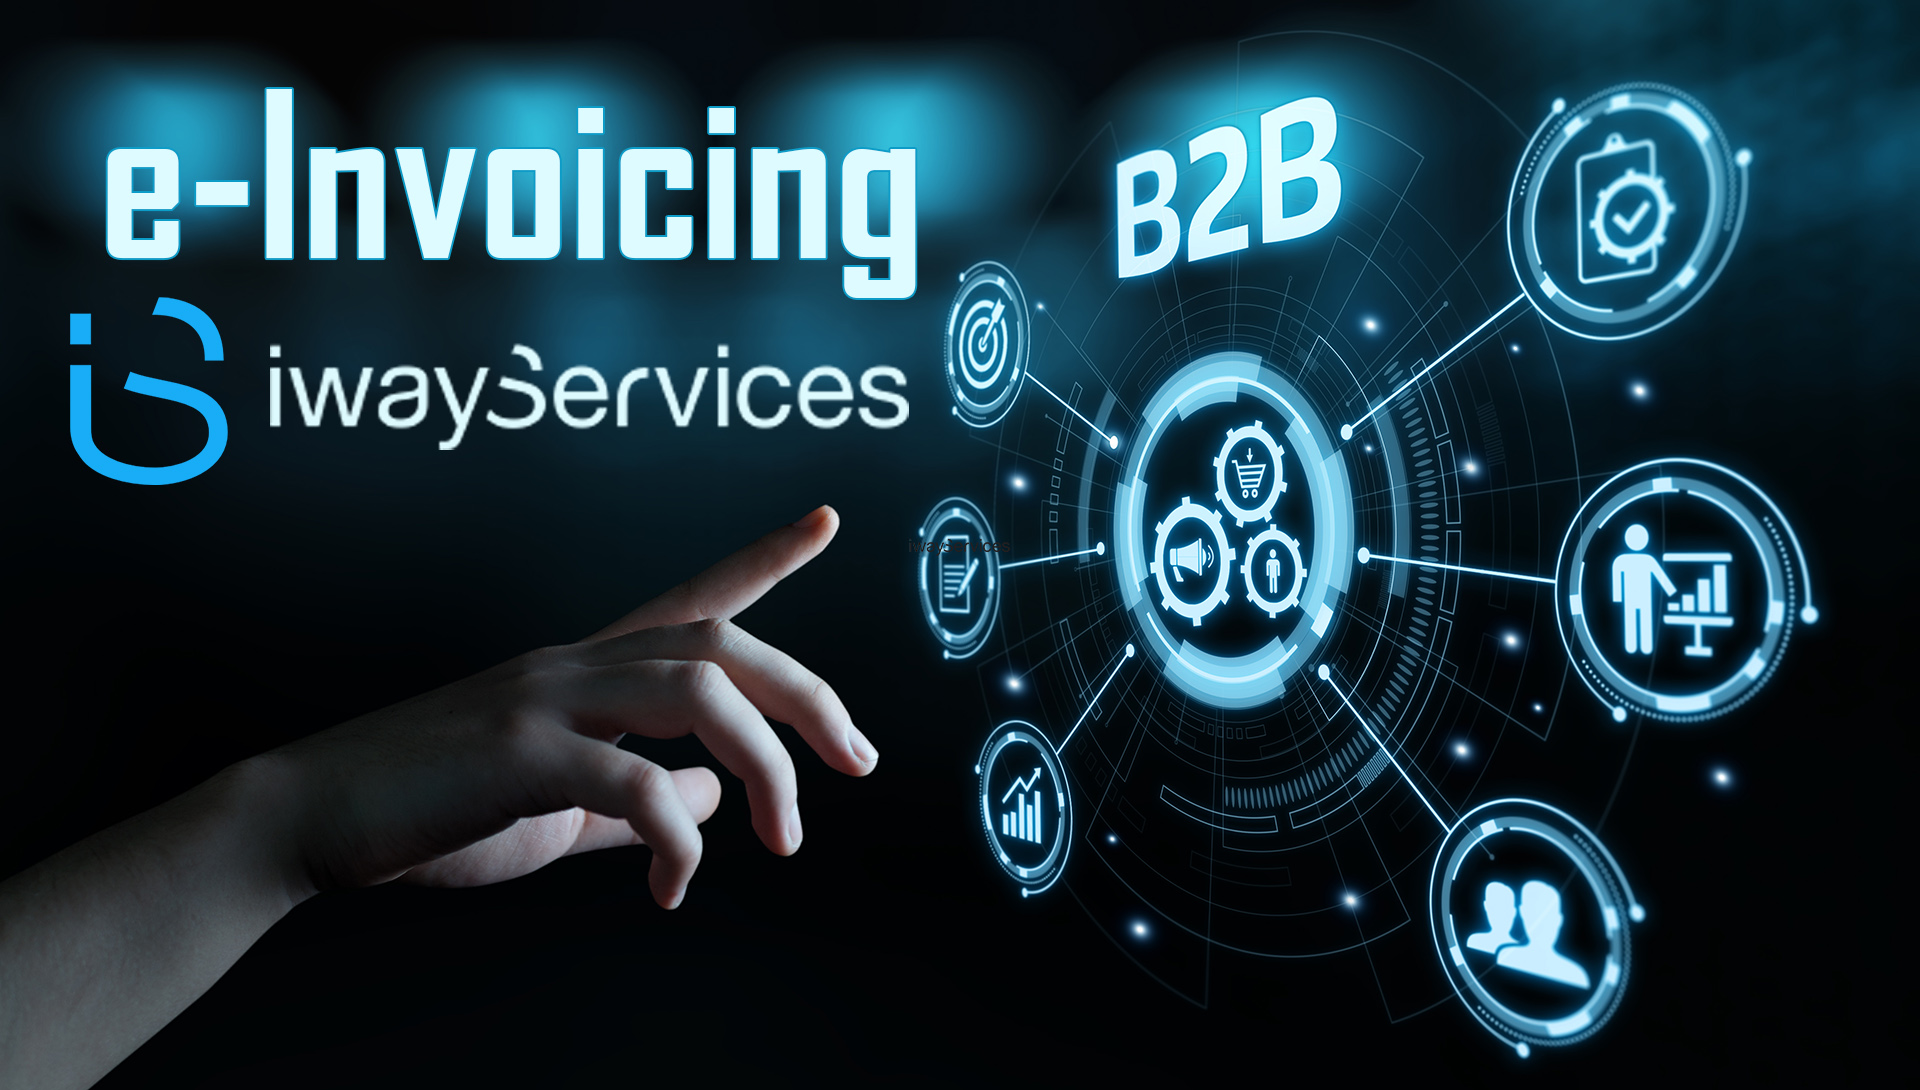 B2B electronic invoicing